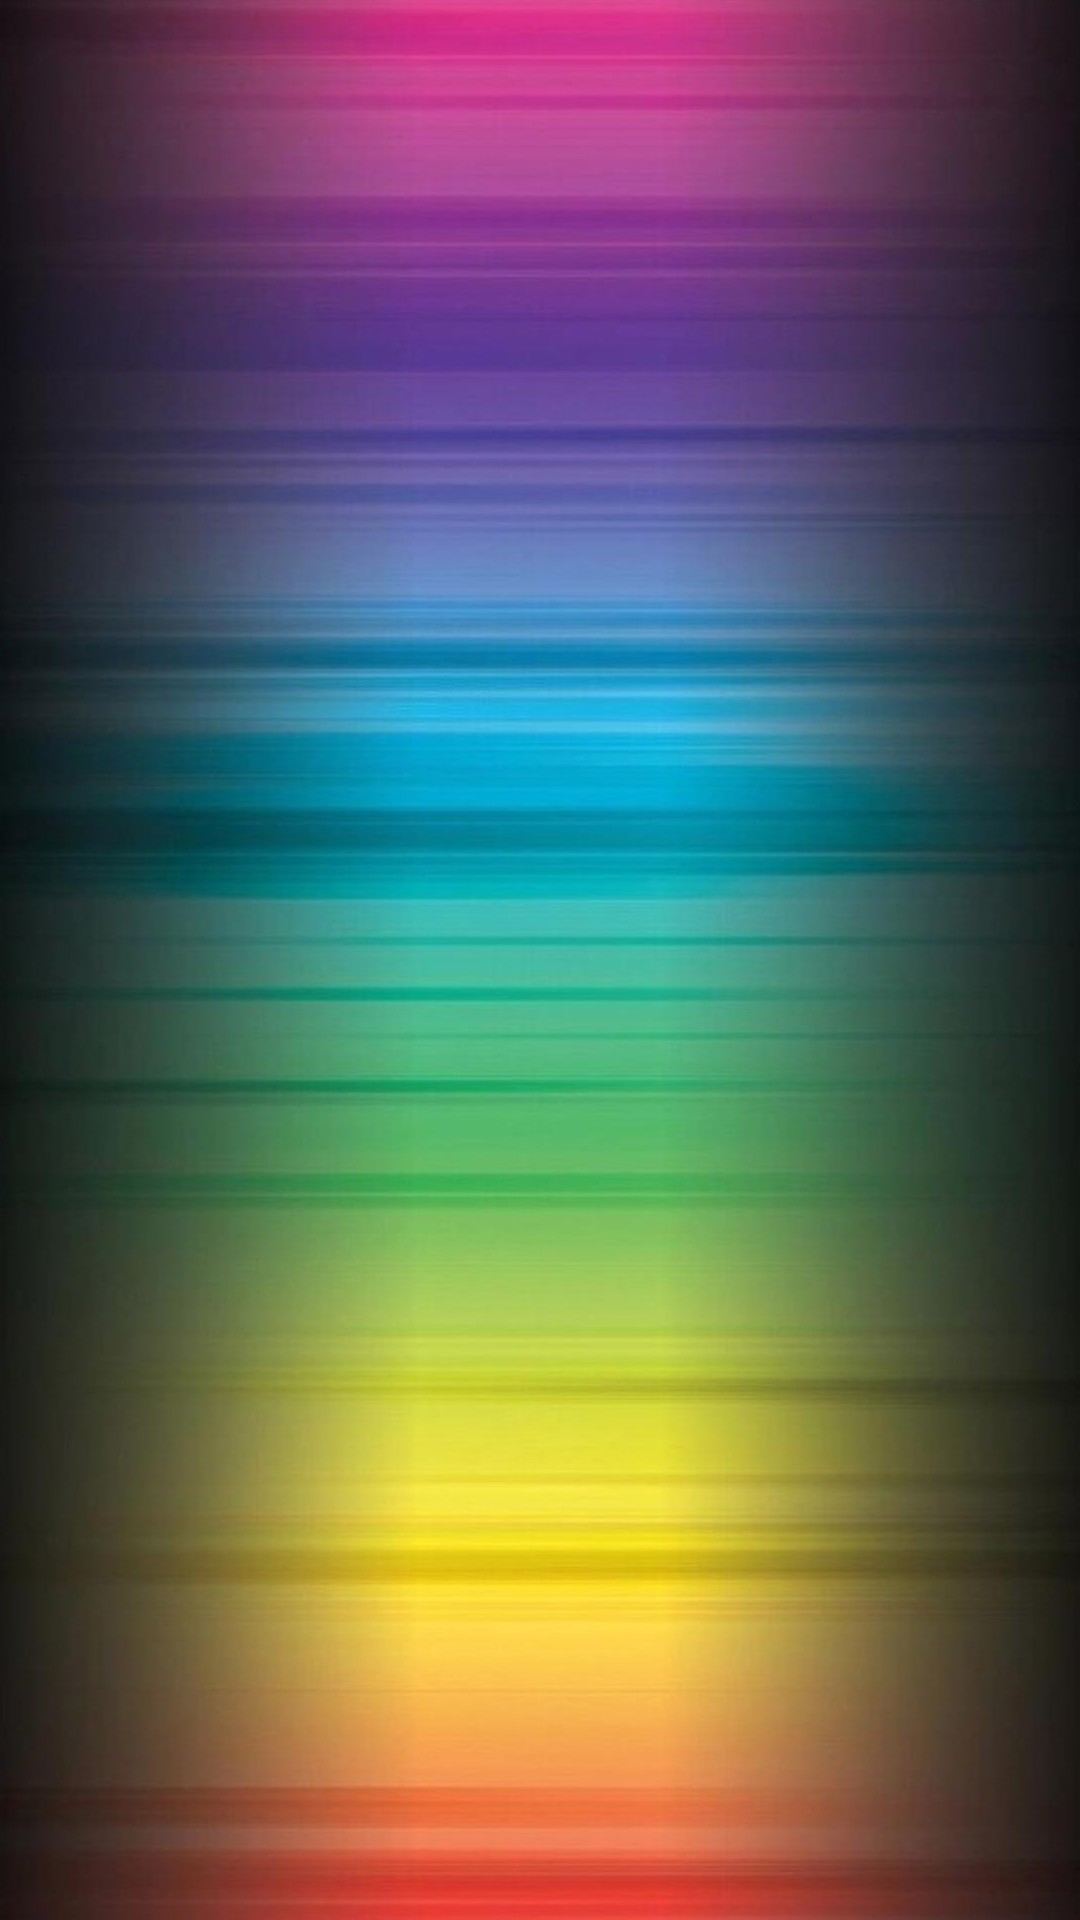 Abstract Samsung Galaxy Note 3 Wallpapers 296, Samsung ...